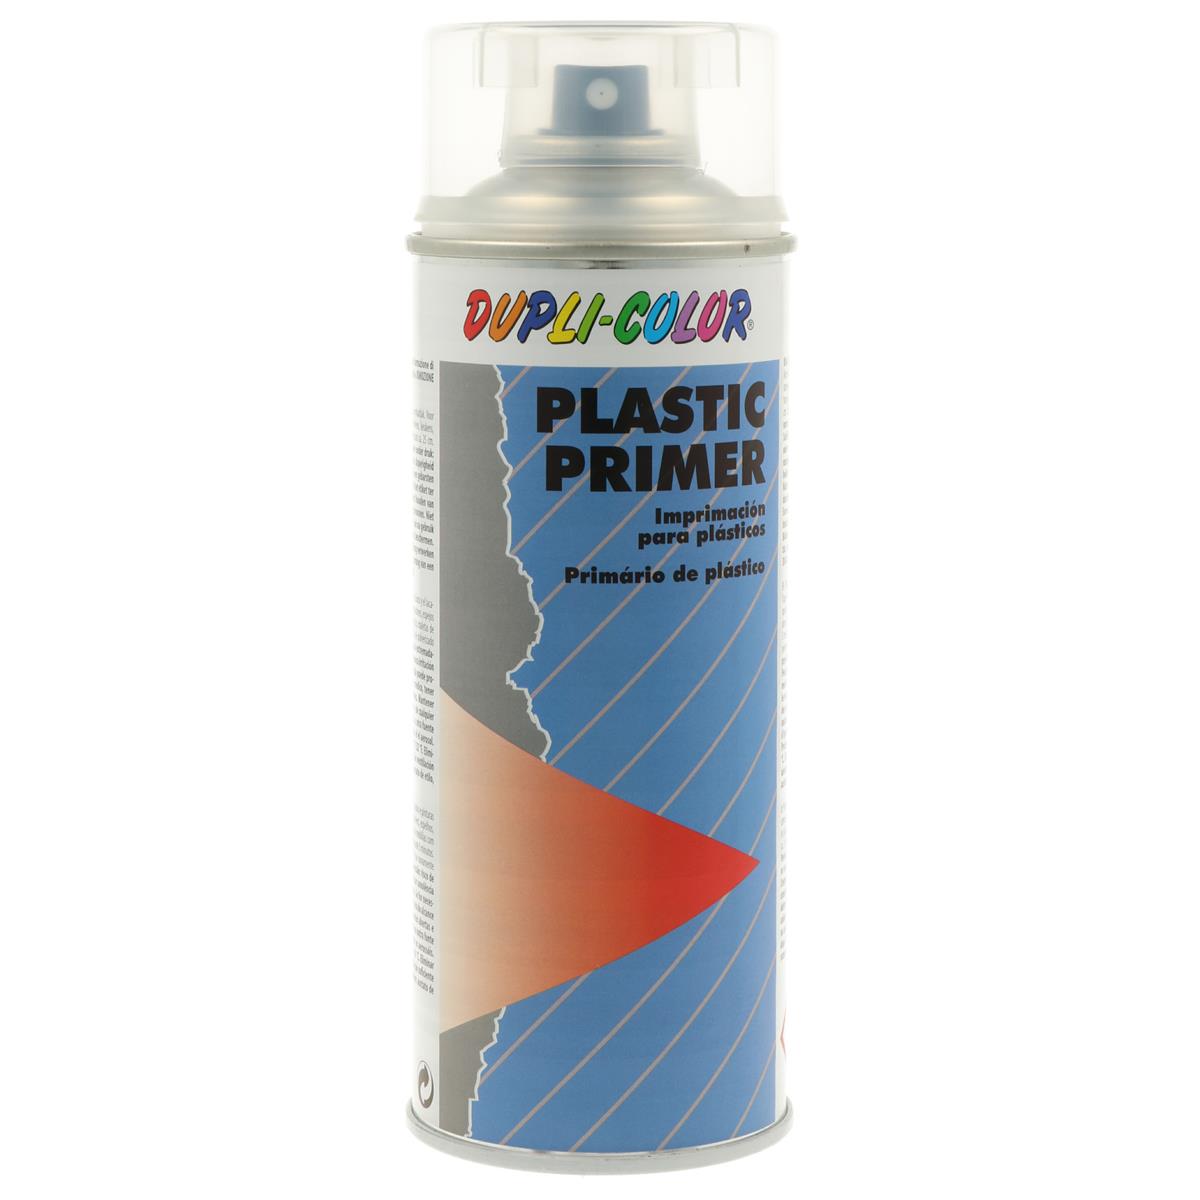 DUPLI-COLOR Plastic Primer - 400ml